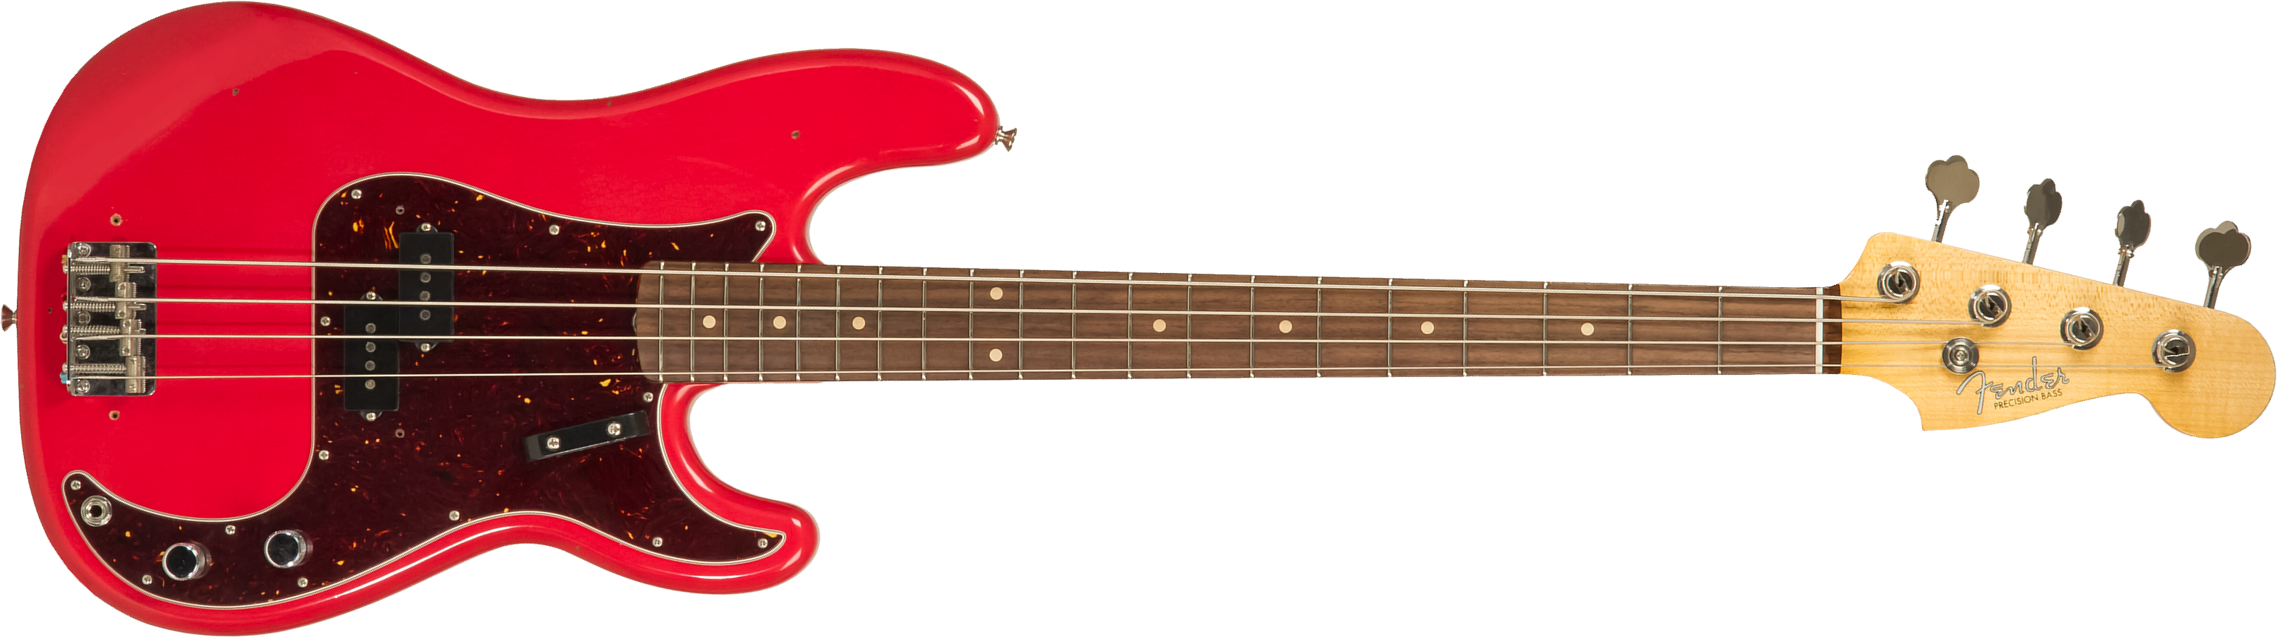 Fender Custom Shop Precision Bass 1962 Rw #r126357 - Journeyman Relic Fiesta Red - Solid body elektrische bas - Main picture